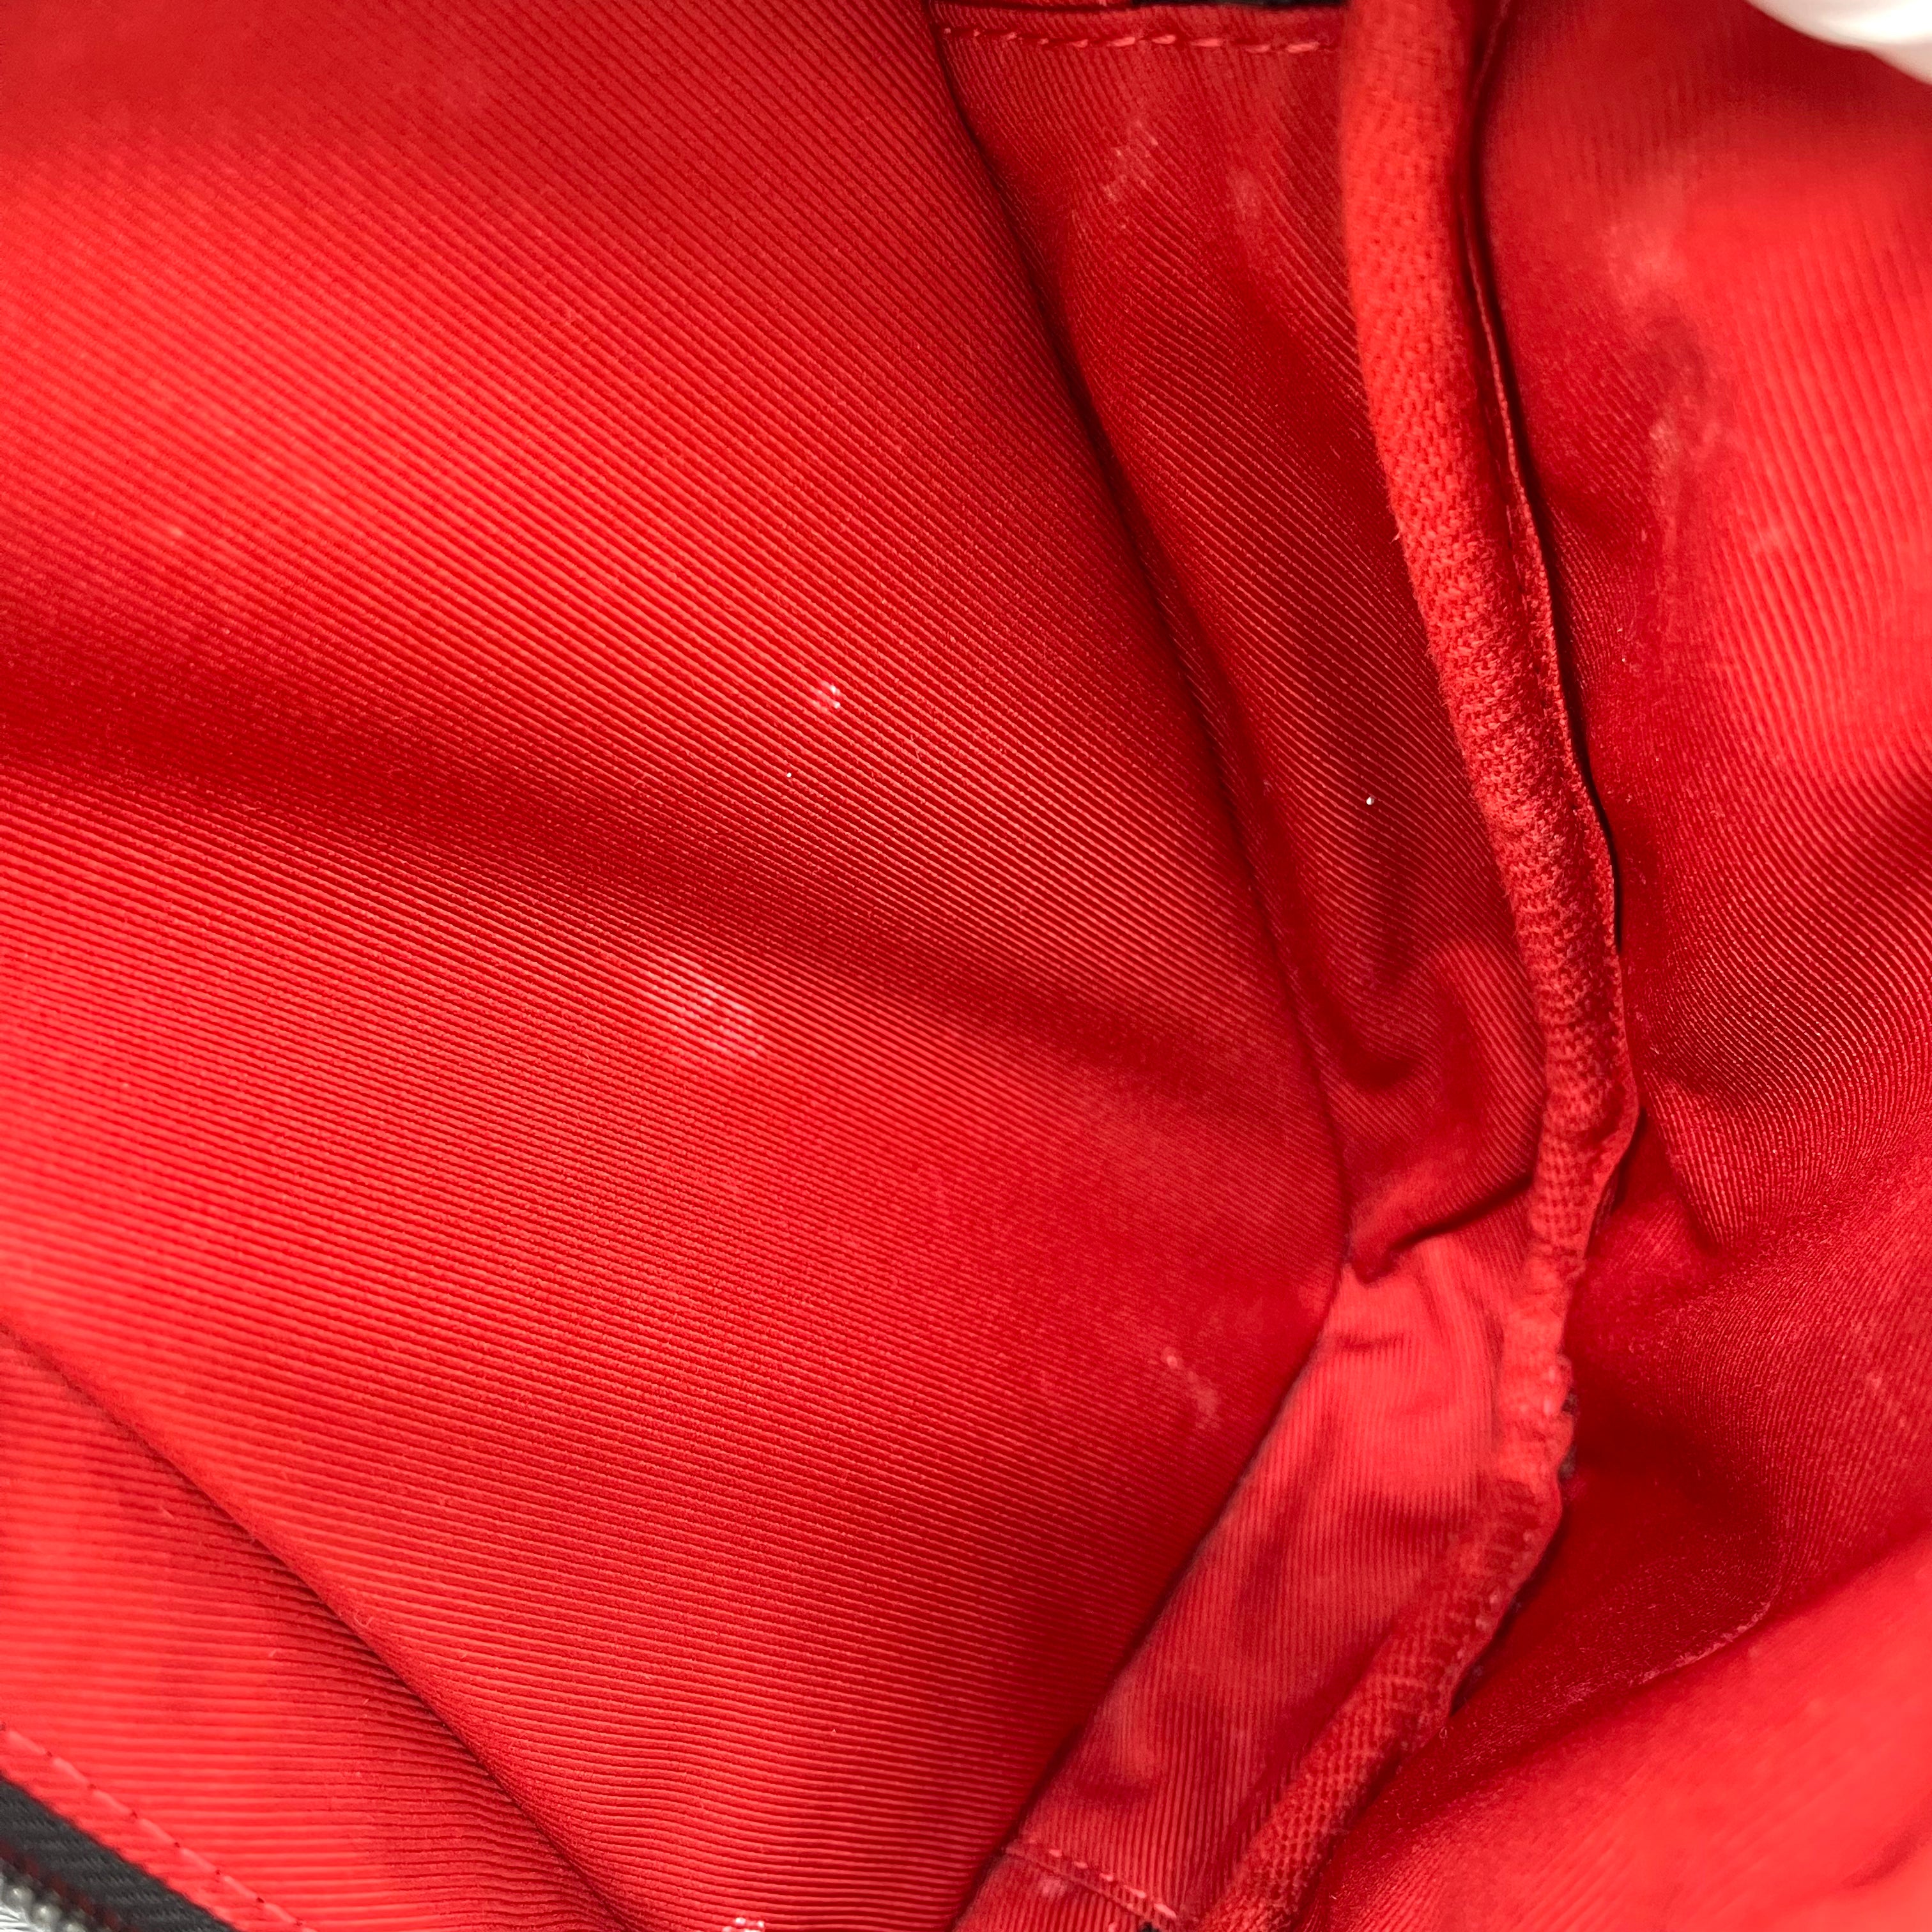 LOUIS VUITTON Louis Vuitton Damier Graphite Utility Backpack Red